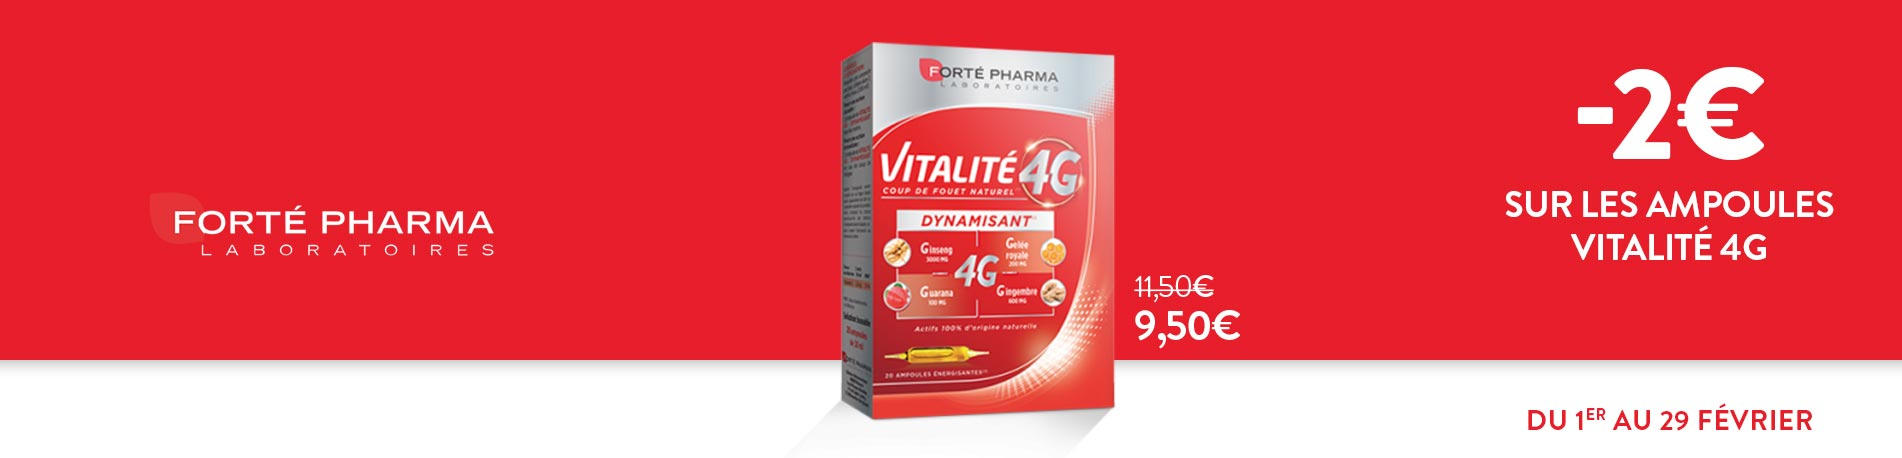 Promotion Forté Pharma Vitalité 4G dynamisant